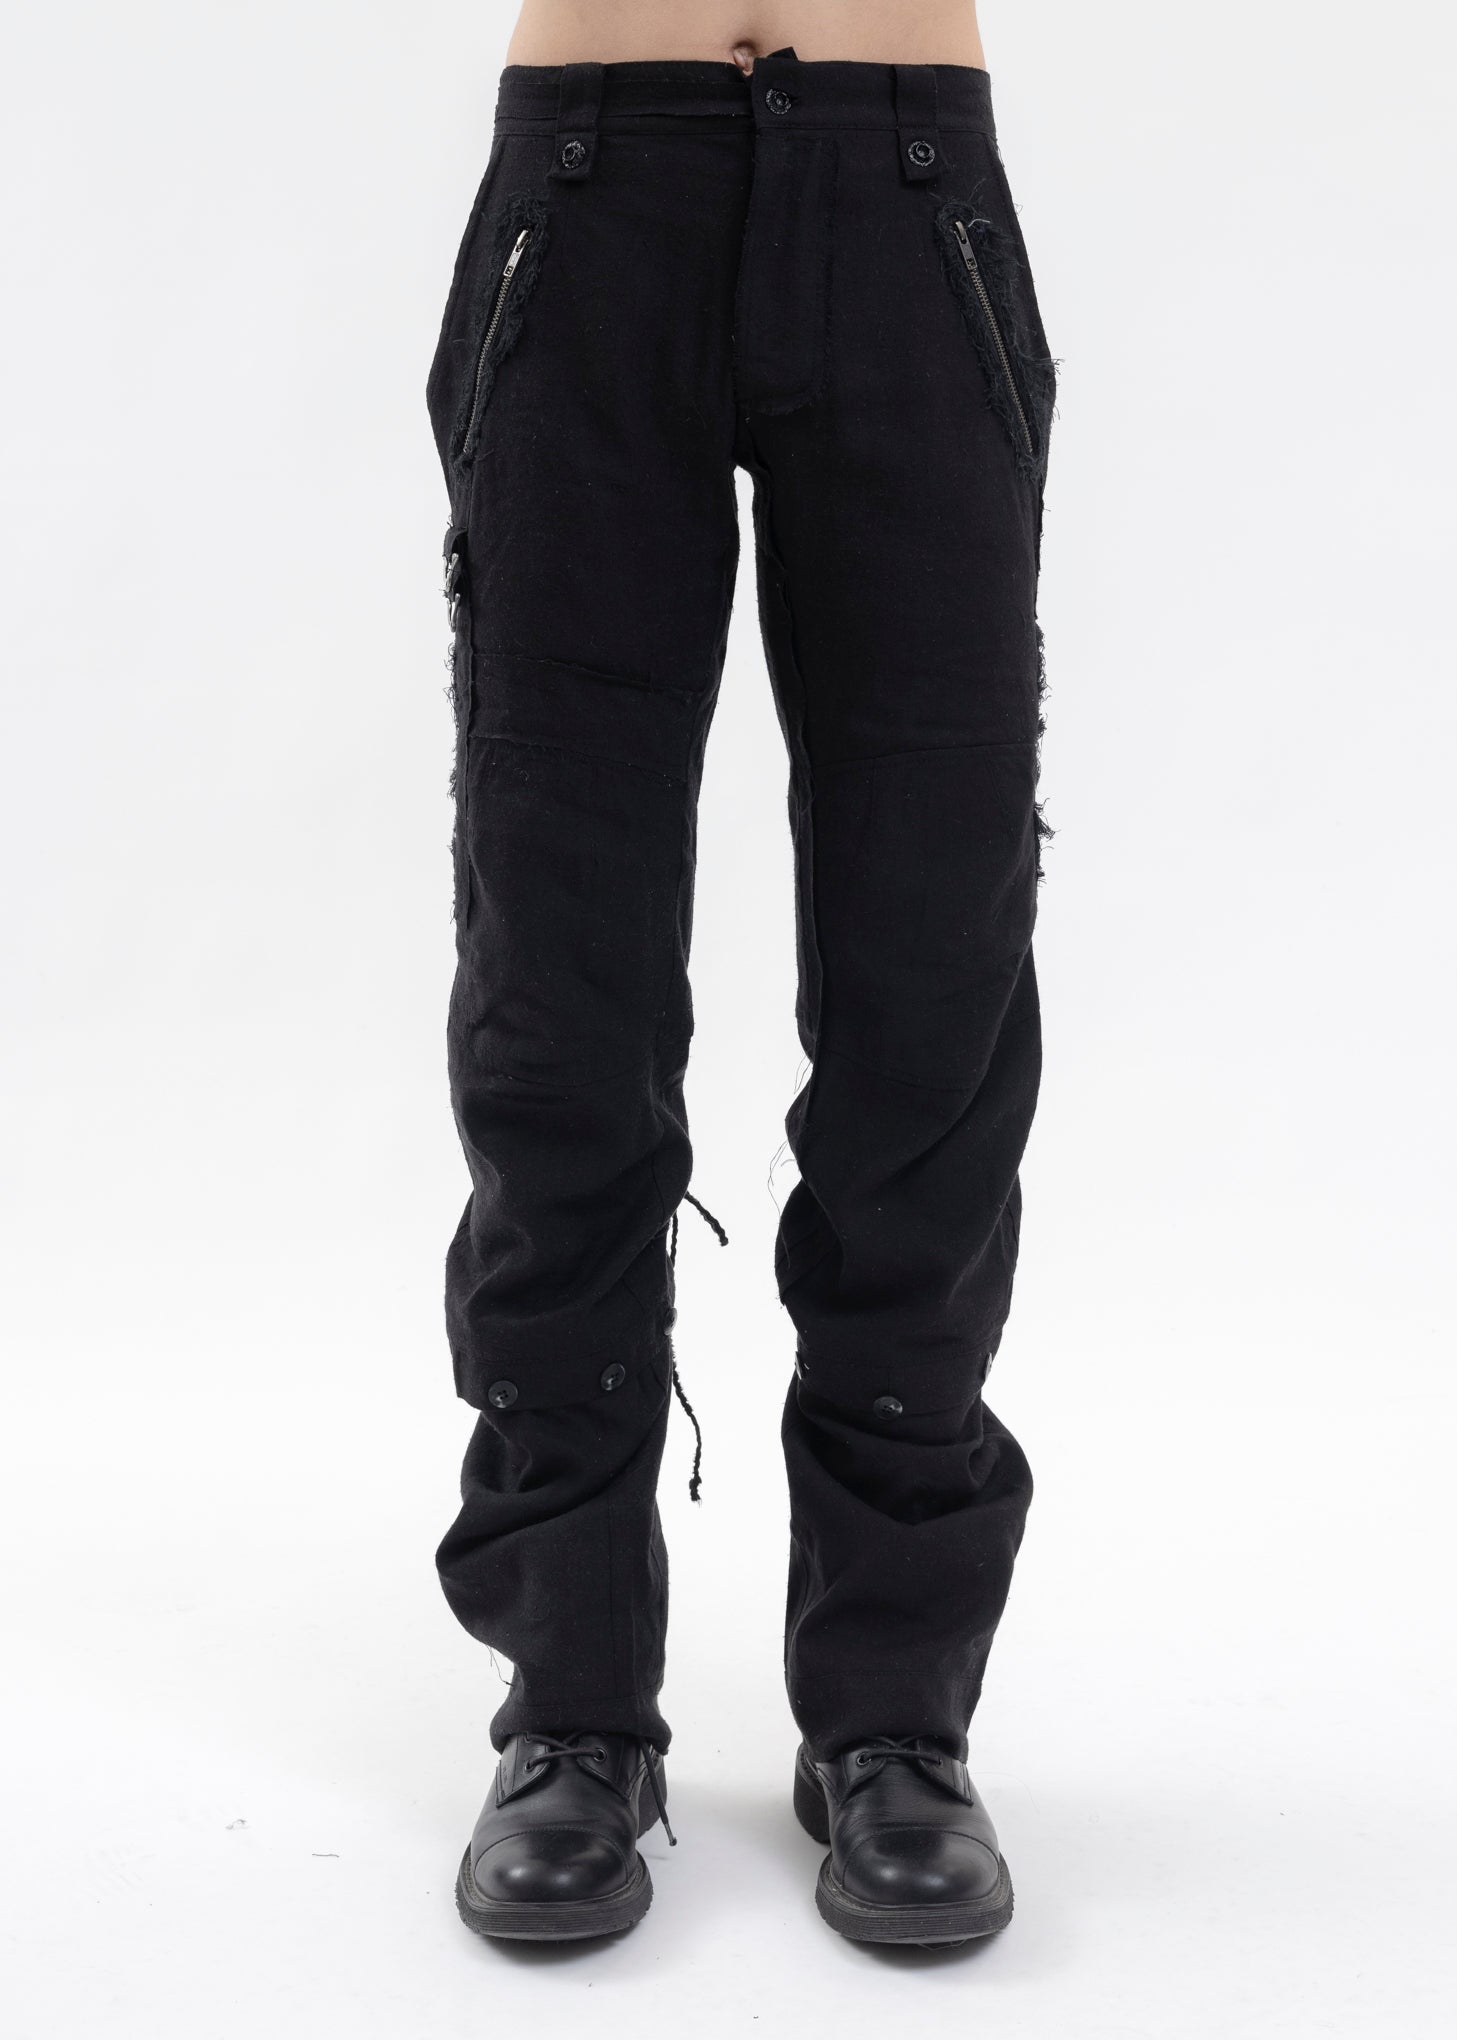 Black Patchwork Pants, Patchwork Clothing